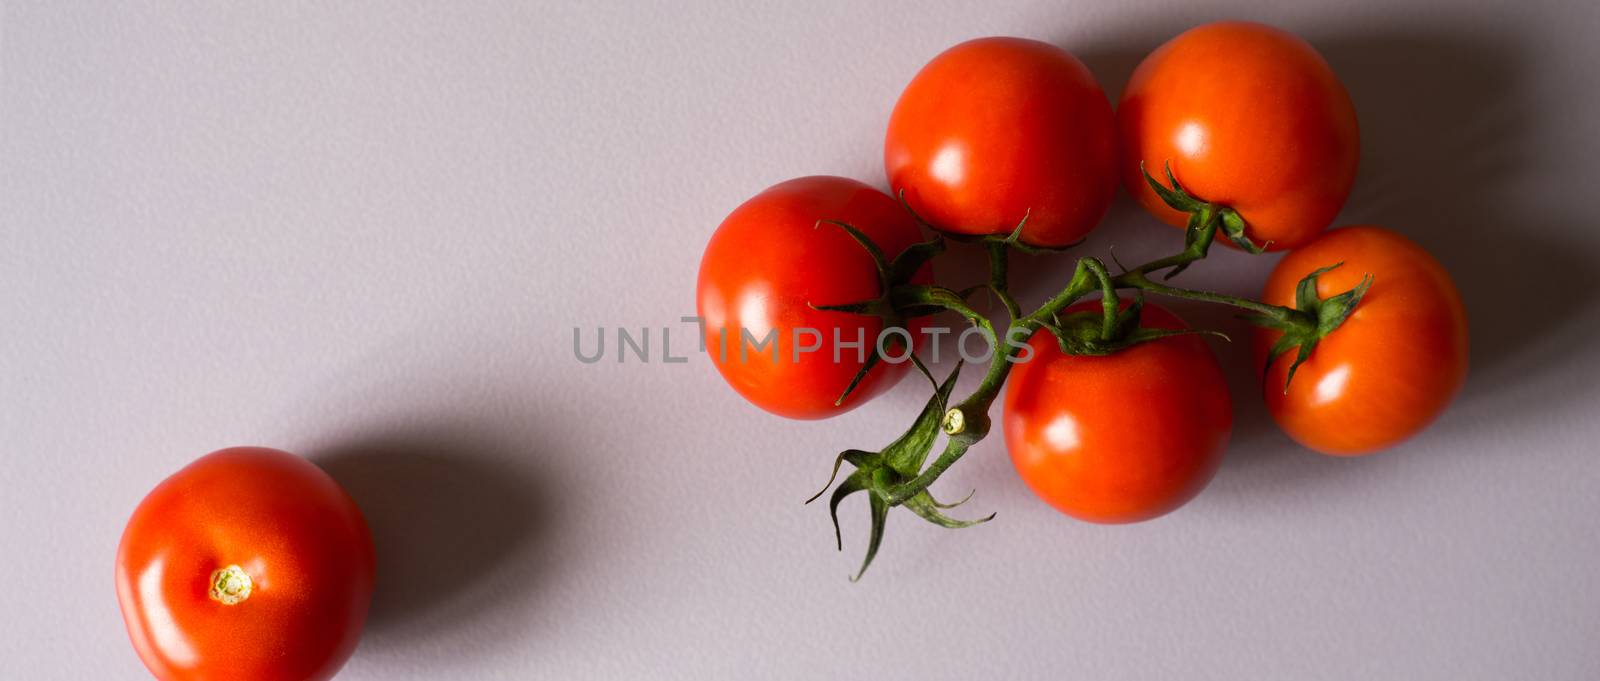 Tomatoes twig on the white background by Deniskarpenkov